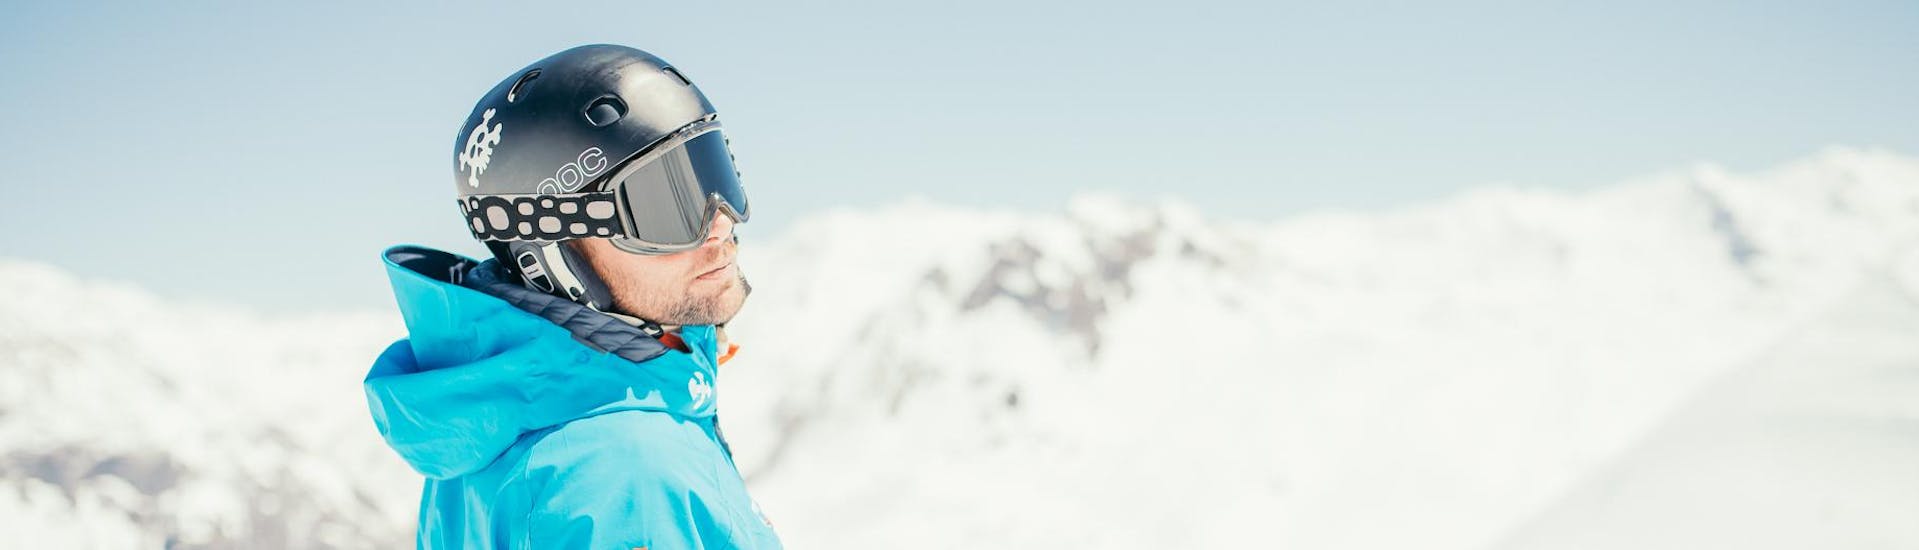 Lezioni di sci per adulti a partire da 14 anni per tutti i livelli.